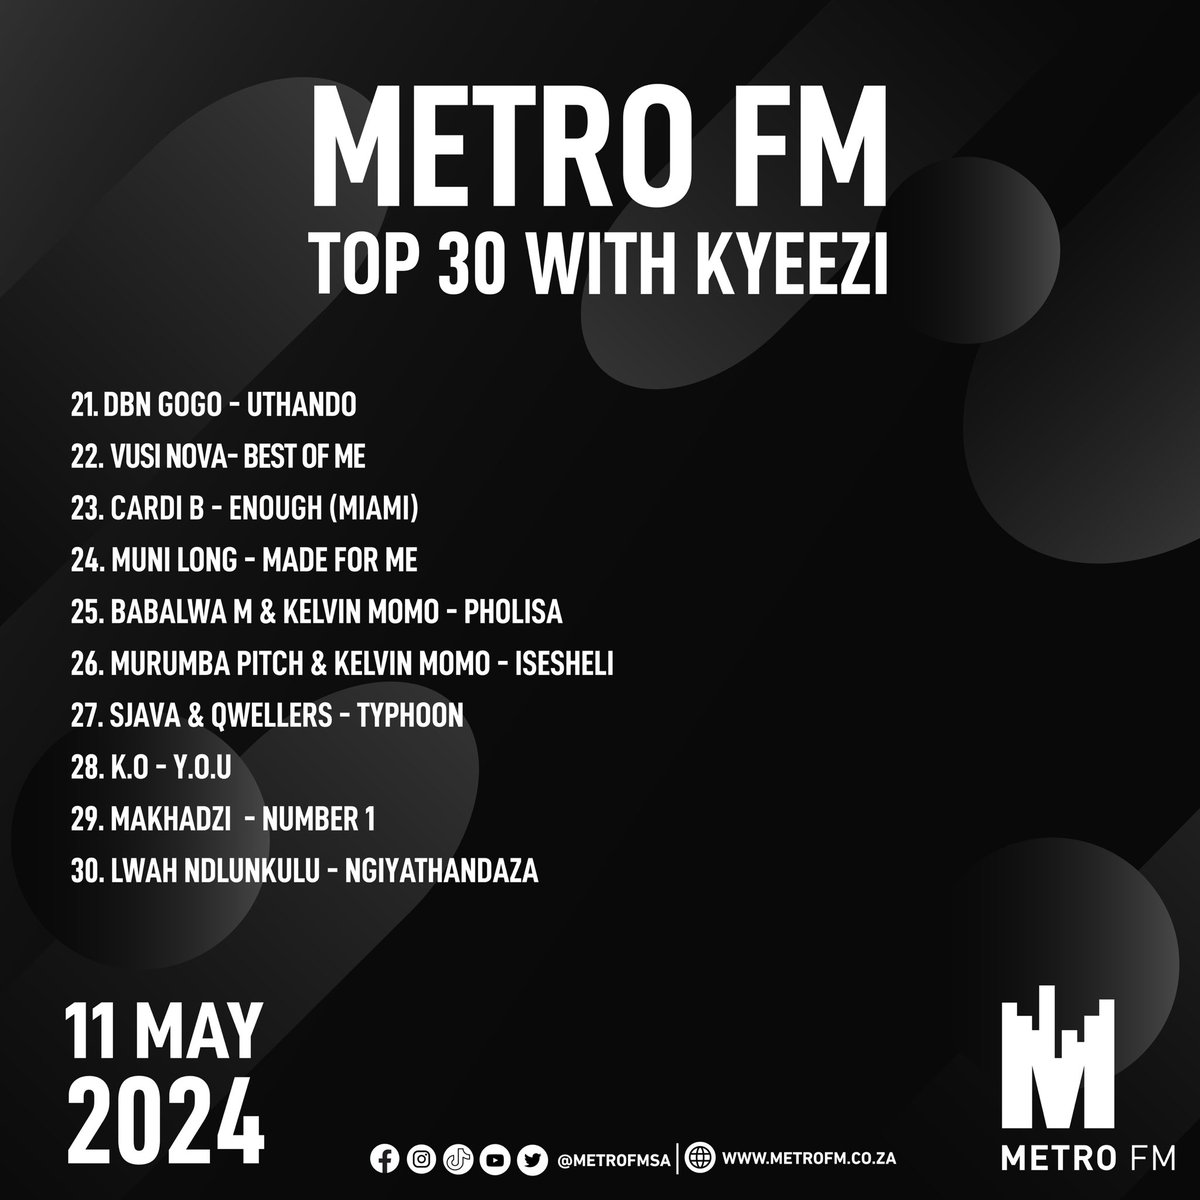 The 30 biggest songs on the chart this week! #METROFMTop30WithKyeezi @kyeezi 🎉🎉 Number 1: @Tyllaaaaaaa - Art.